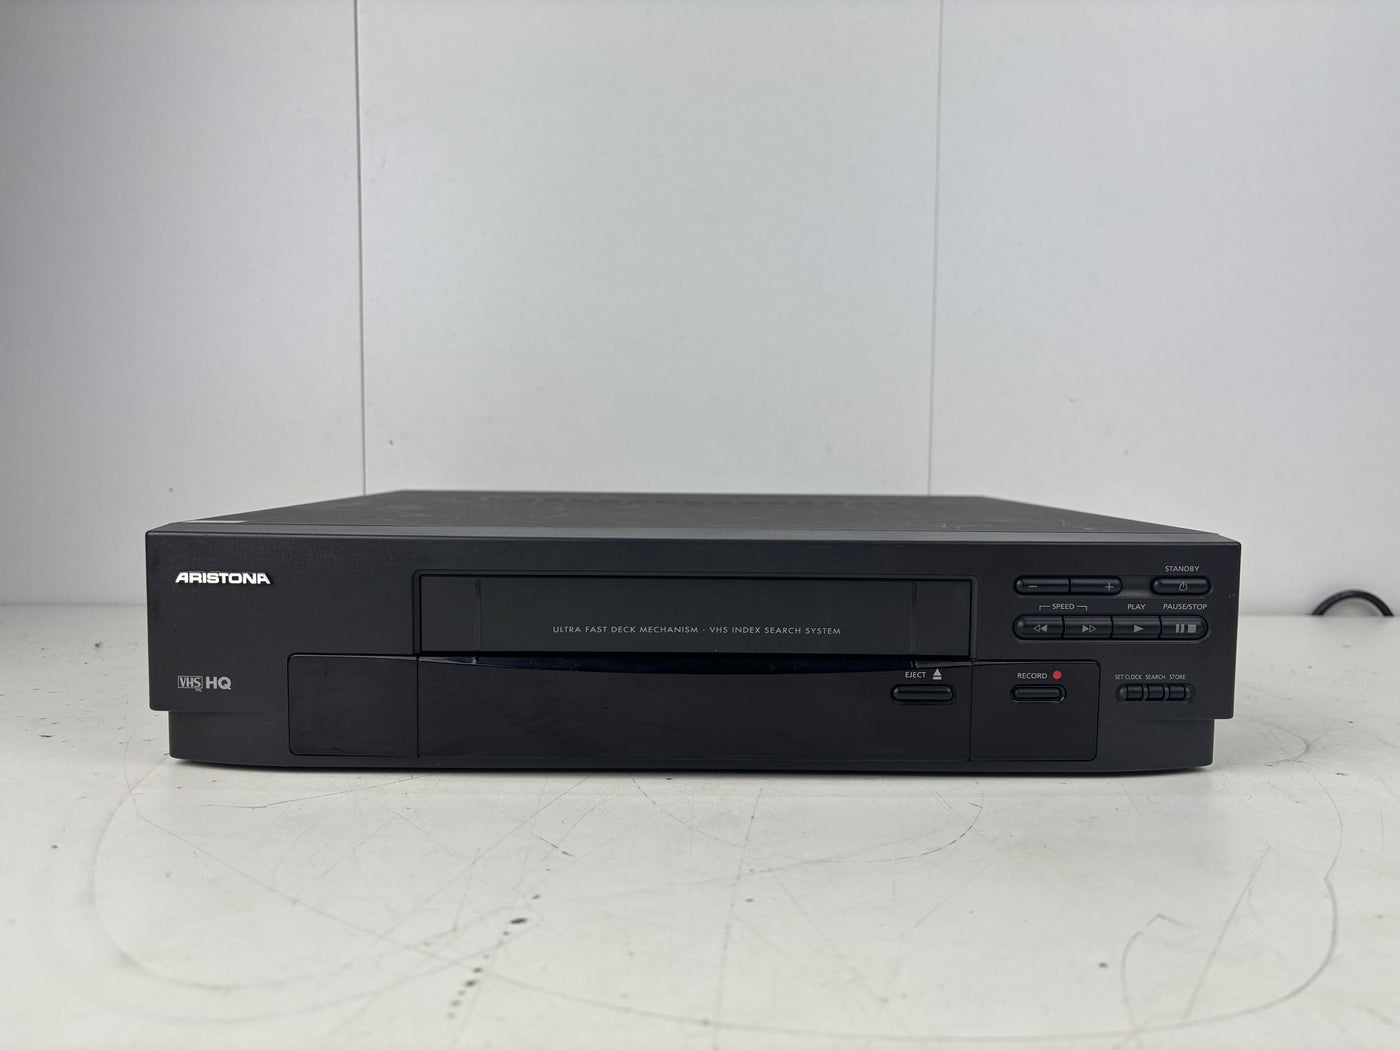 Aristona 2SB41/03 VHS Videorecorder